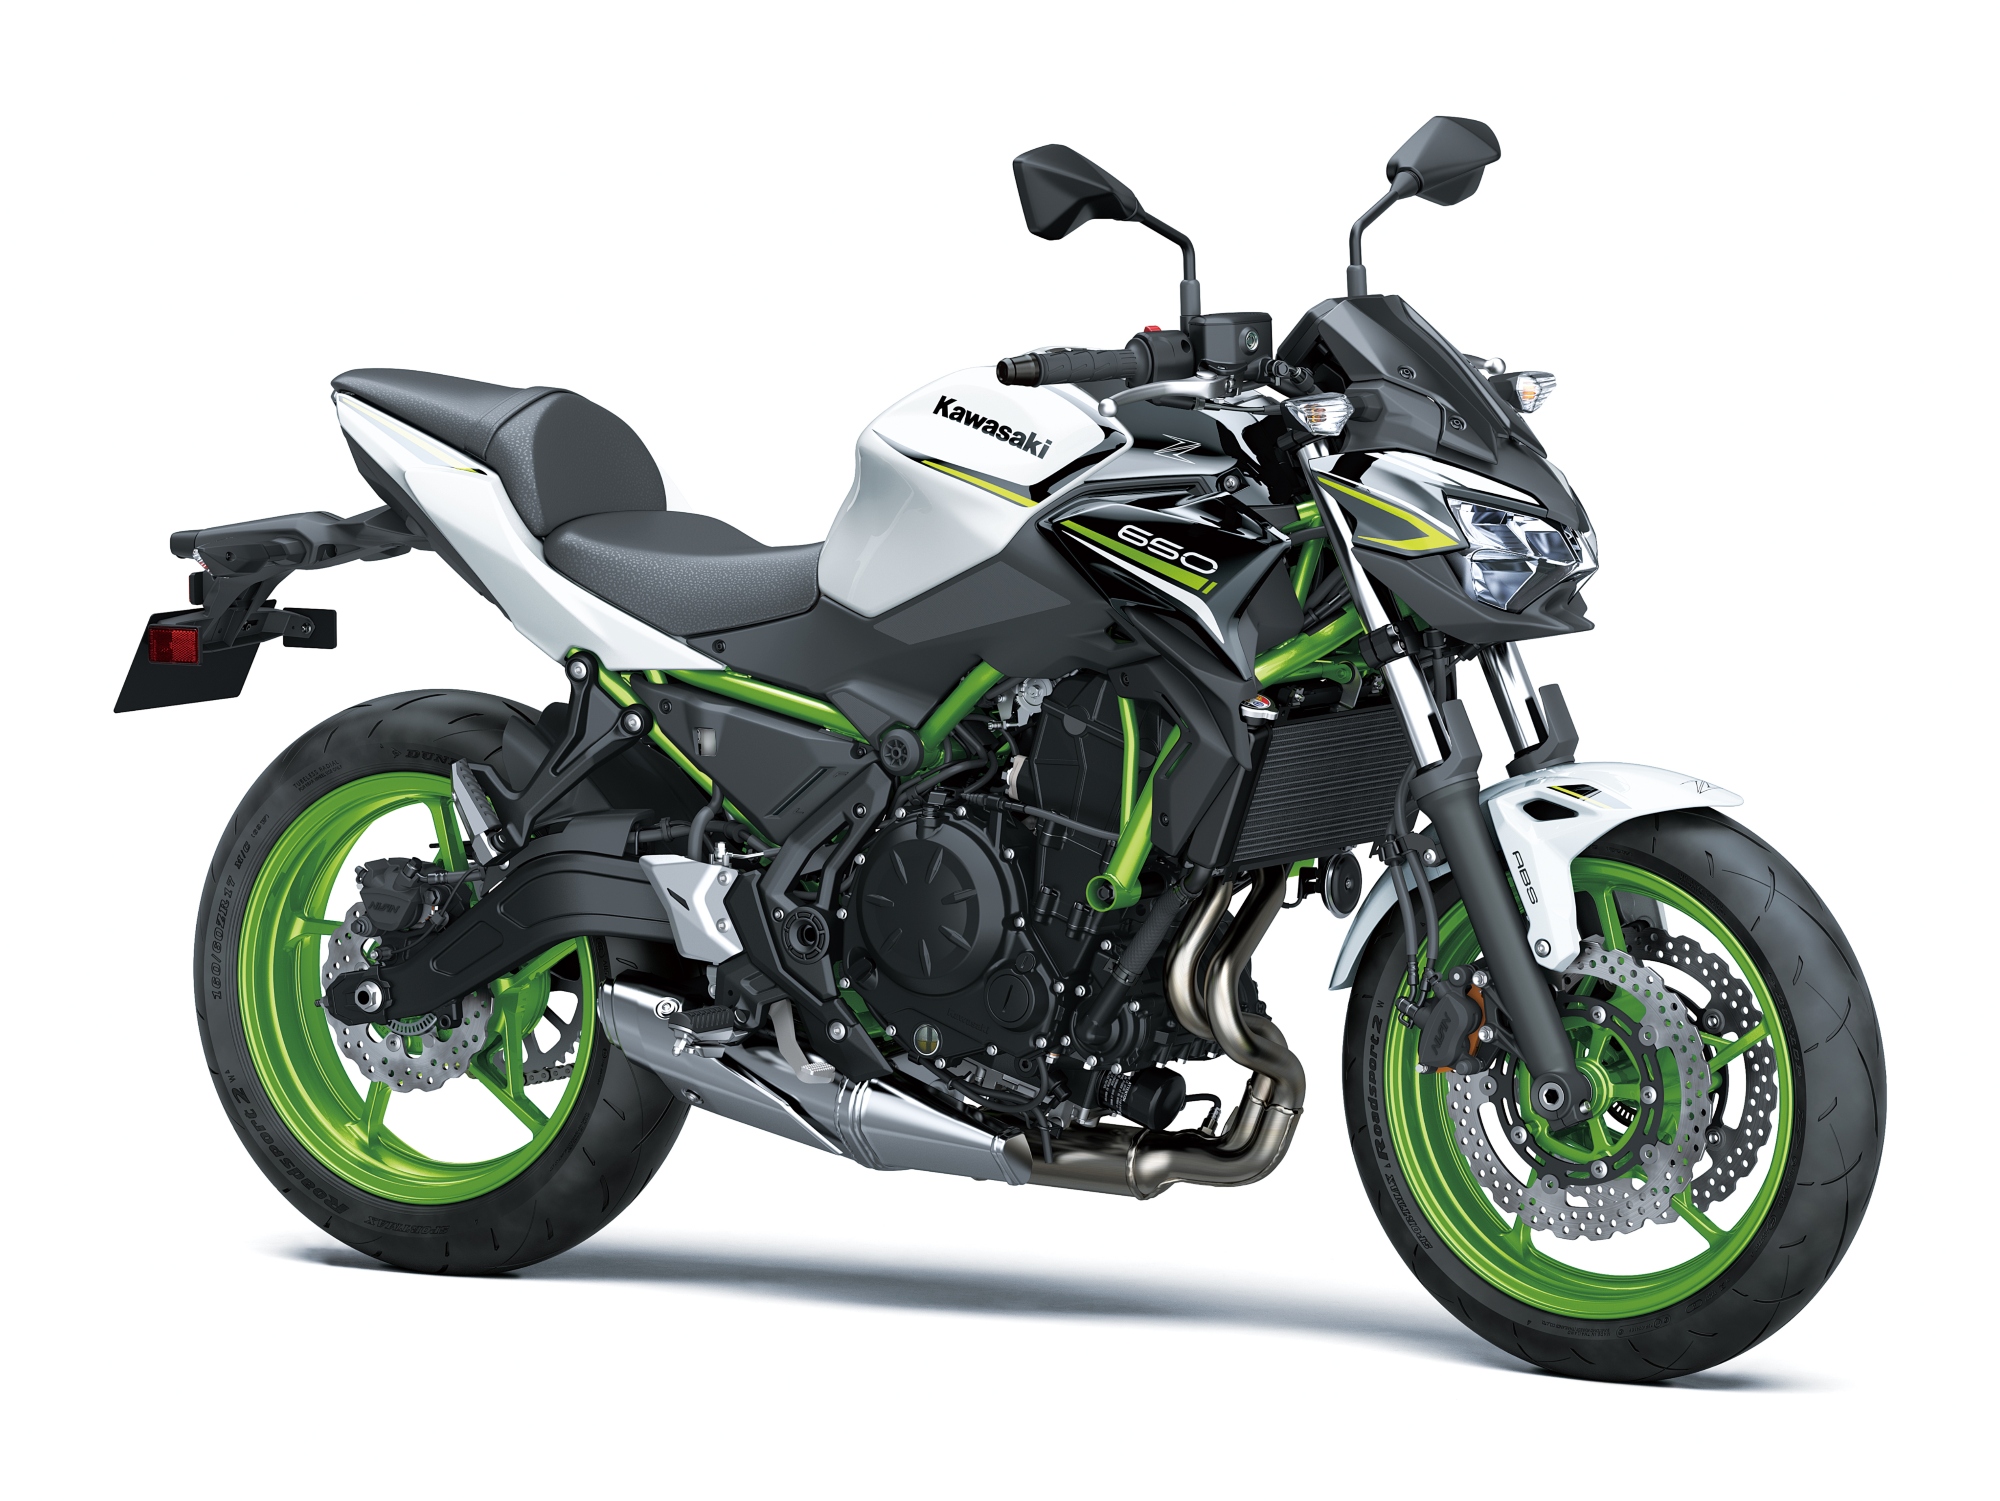 Kawasaki 650cc twins get overhaul 2021 - de... Visordown